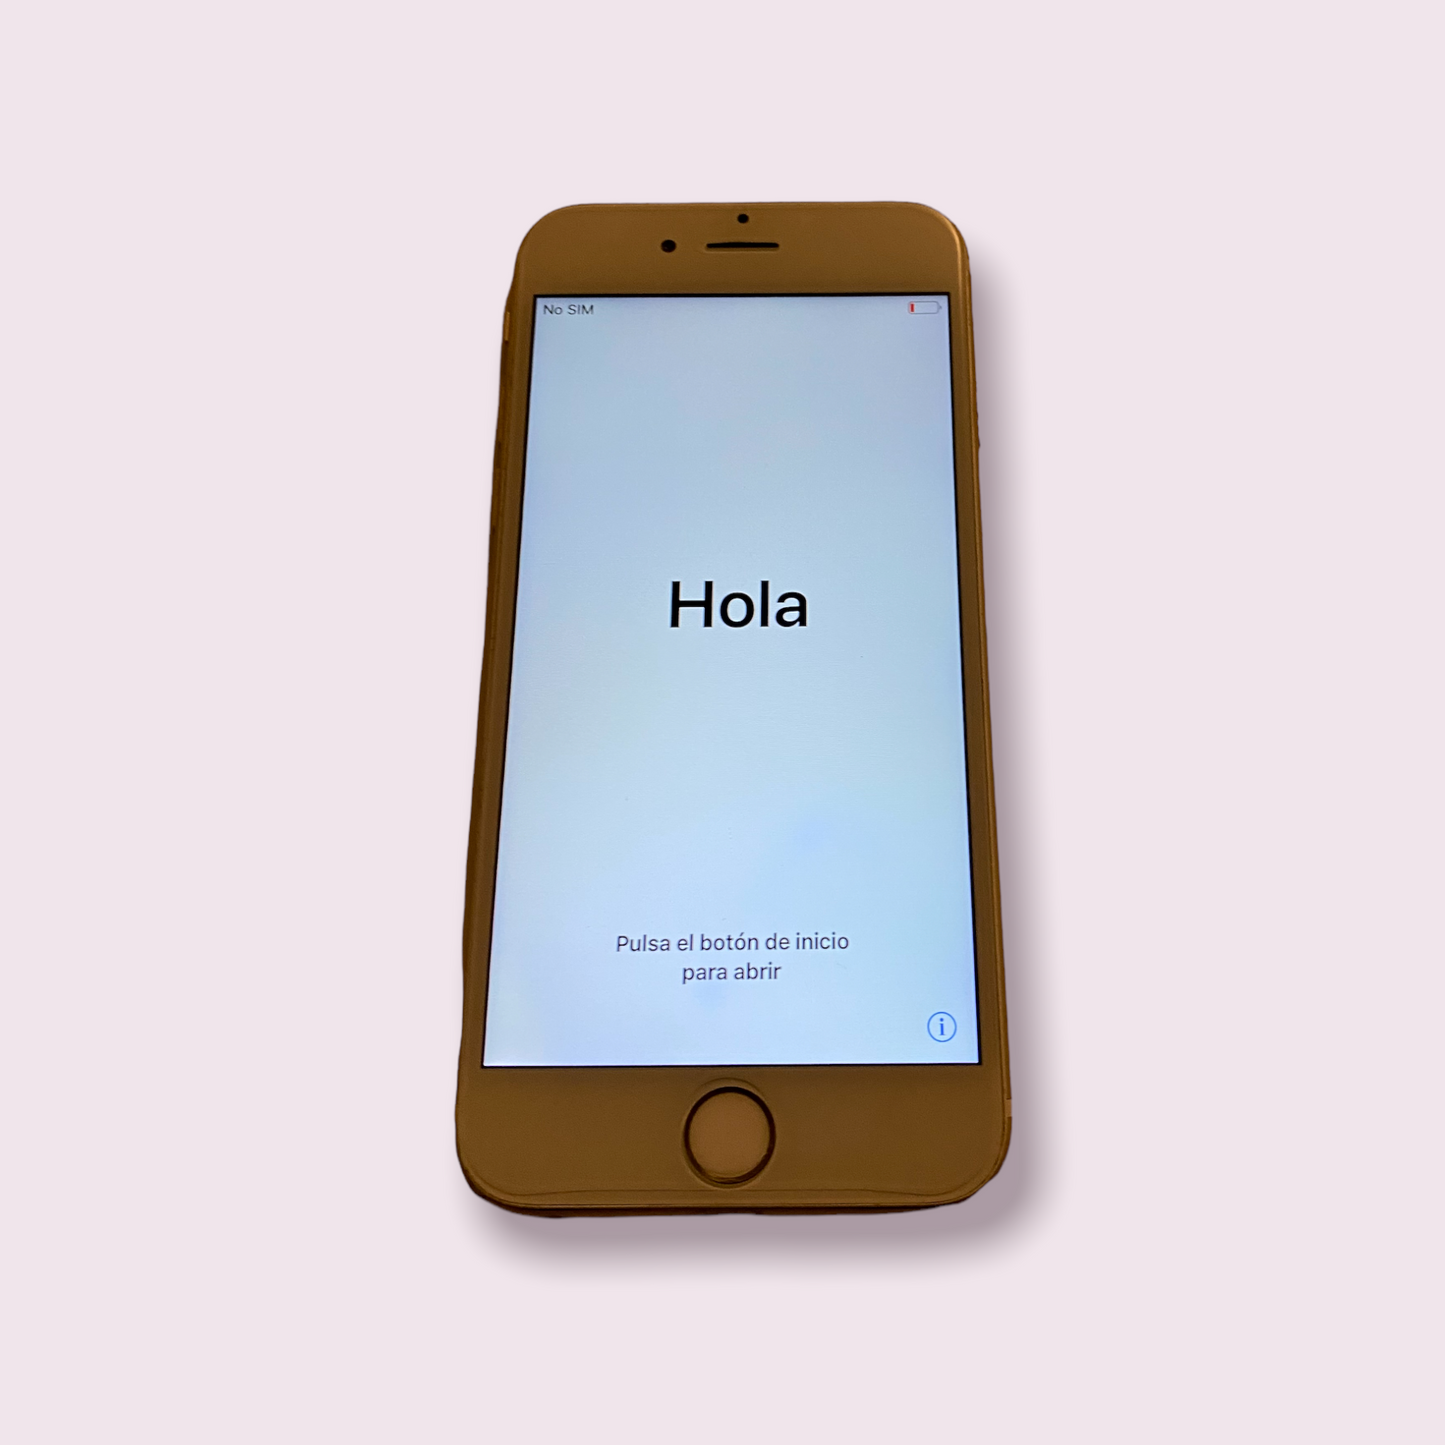 Apple iPhone 6 16GB Gold - Unlocked - Grade B/C